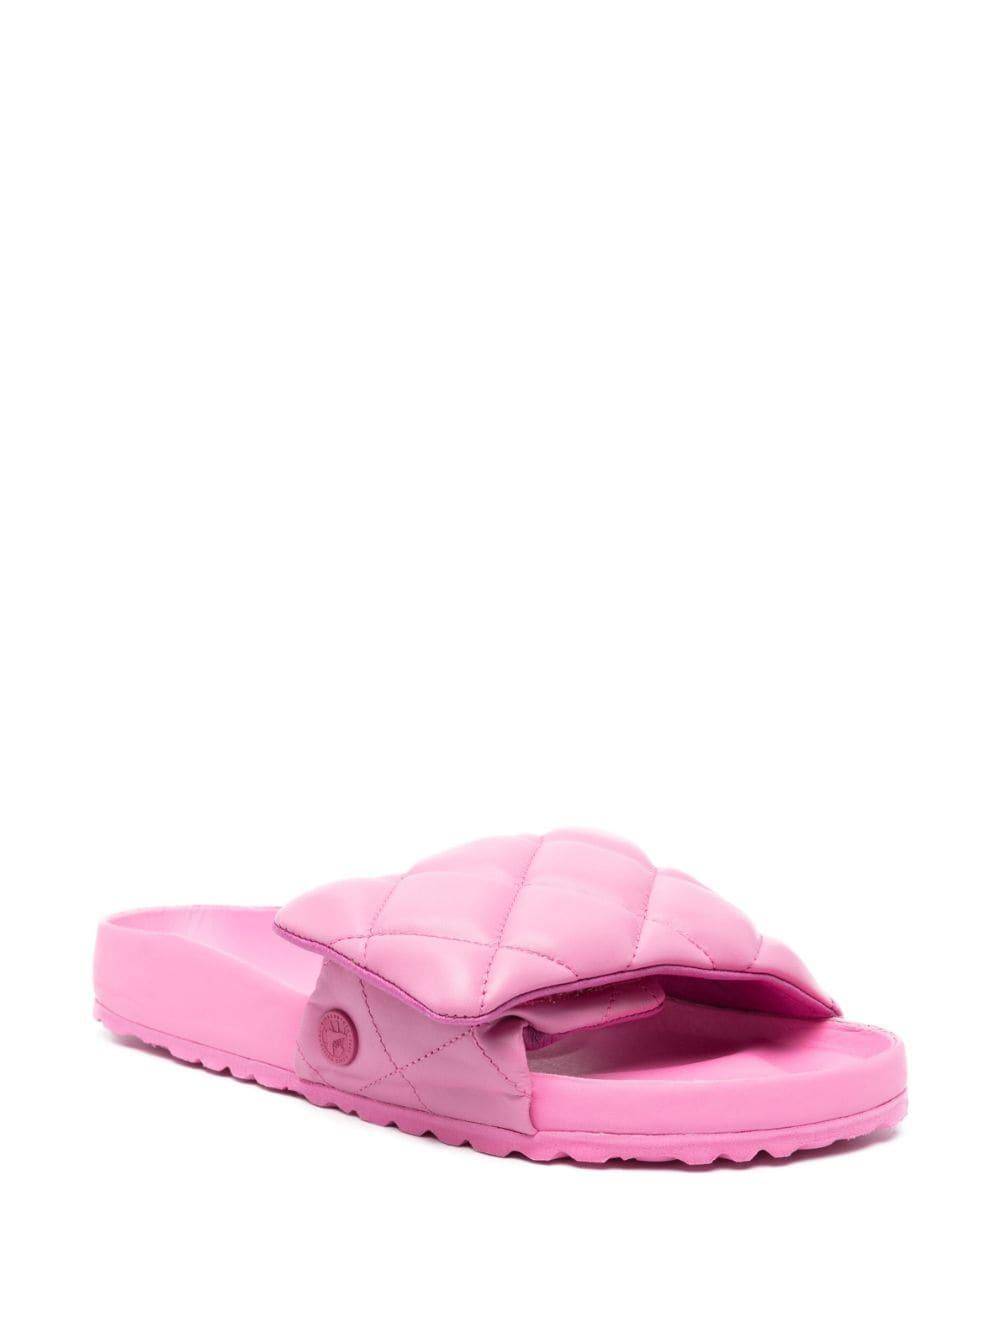 Birkenstock 1774 Sylt Padded Leather Sandals in Pink